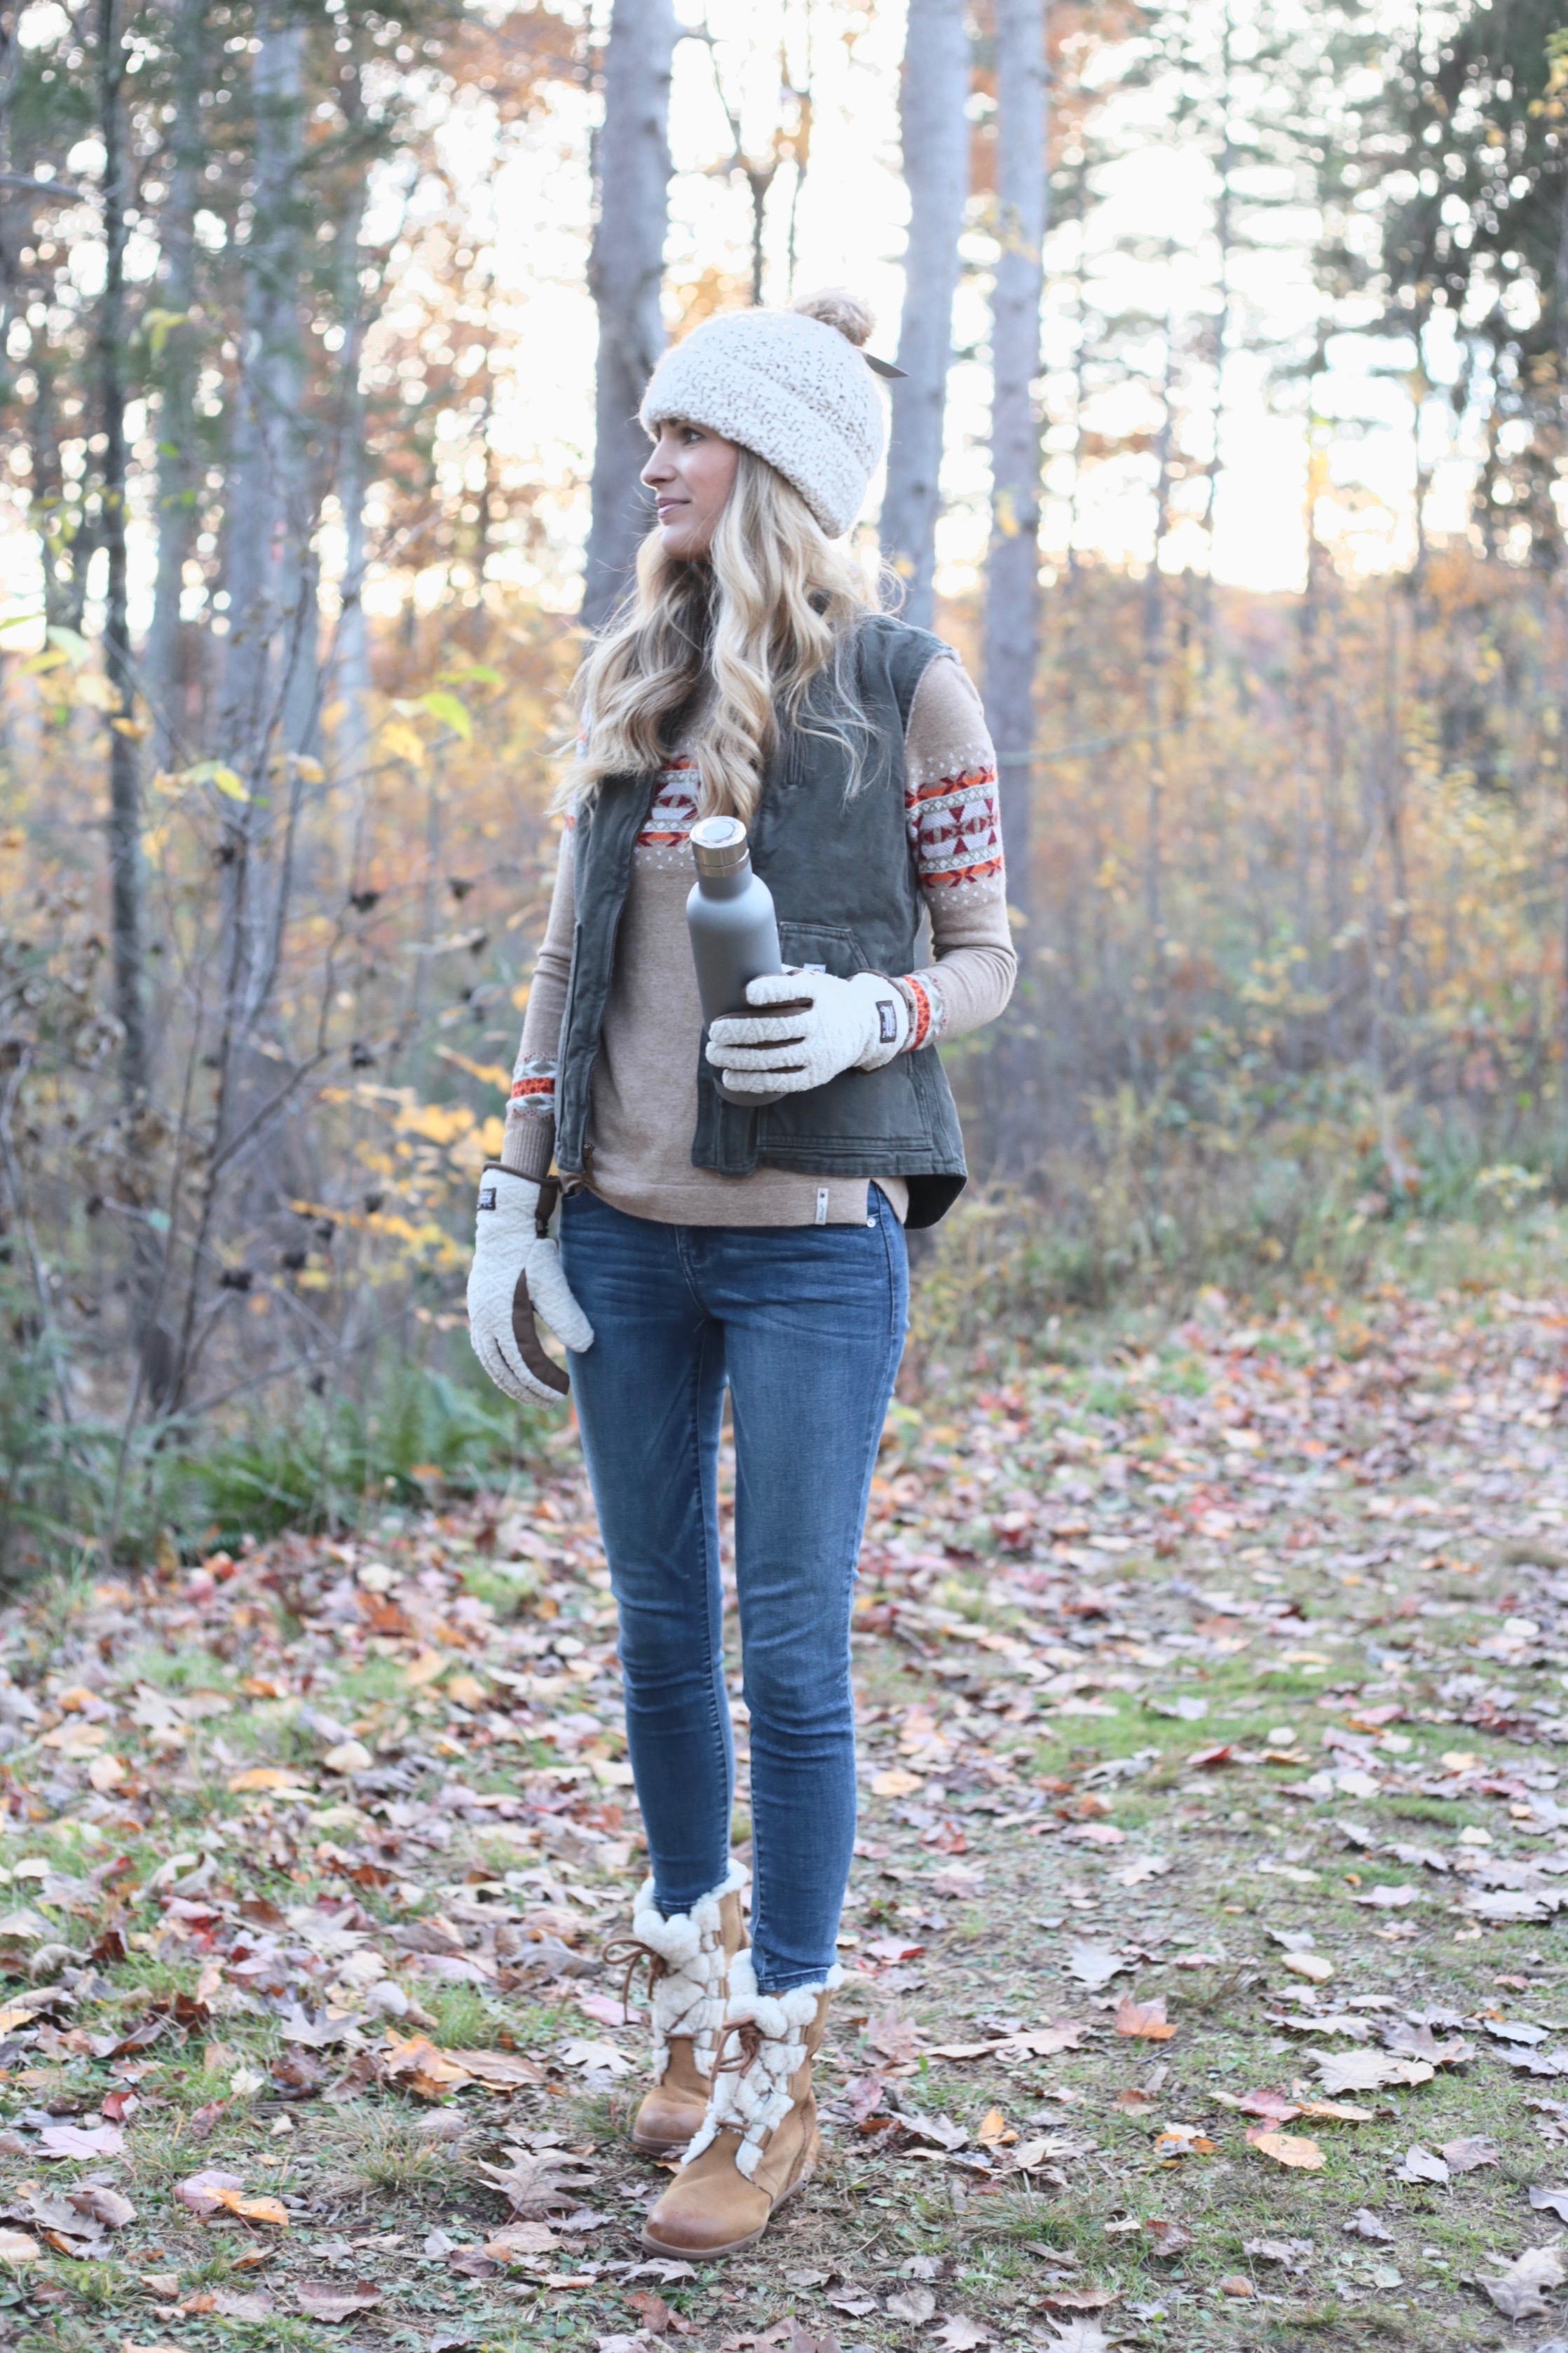  fall family layers - pinteresting plans fashion blogger rachel moore hiking